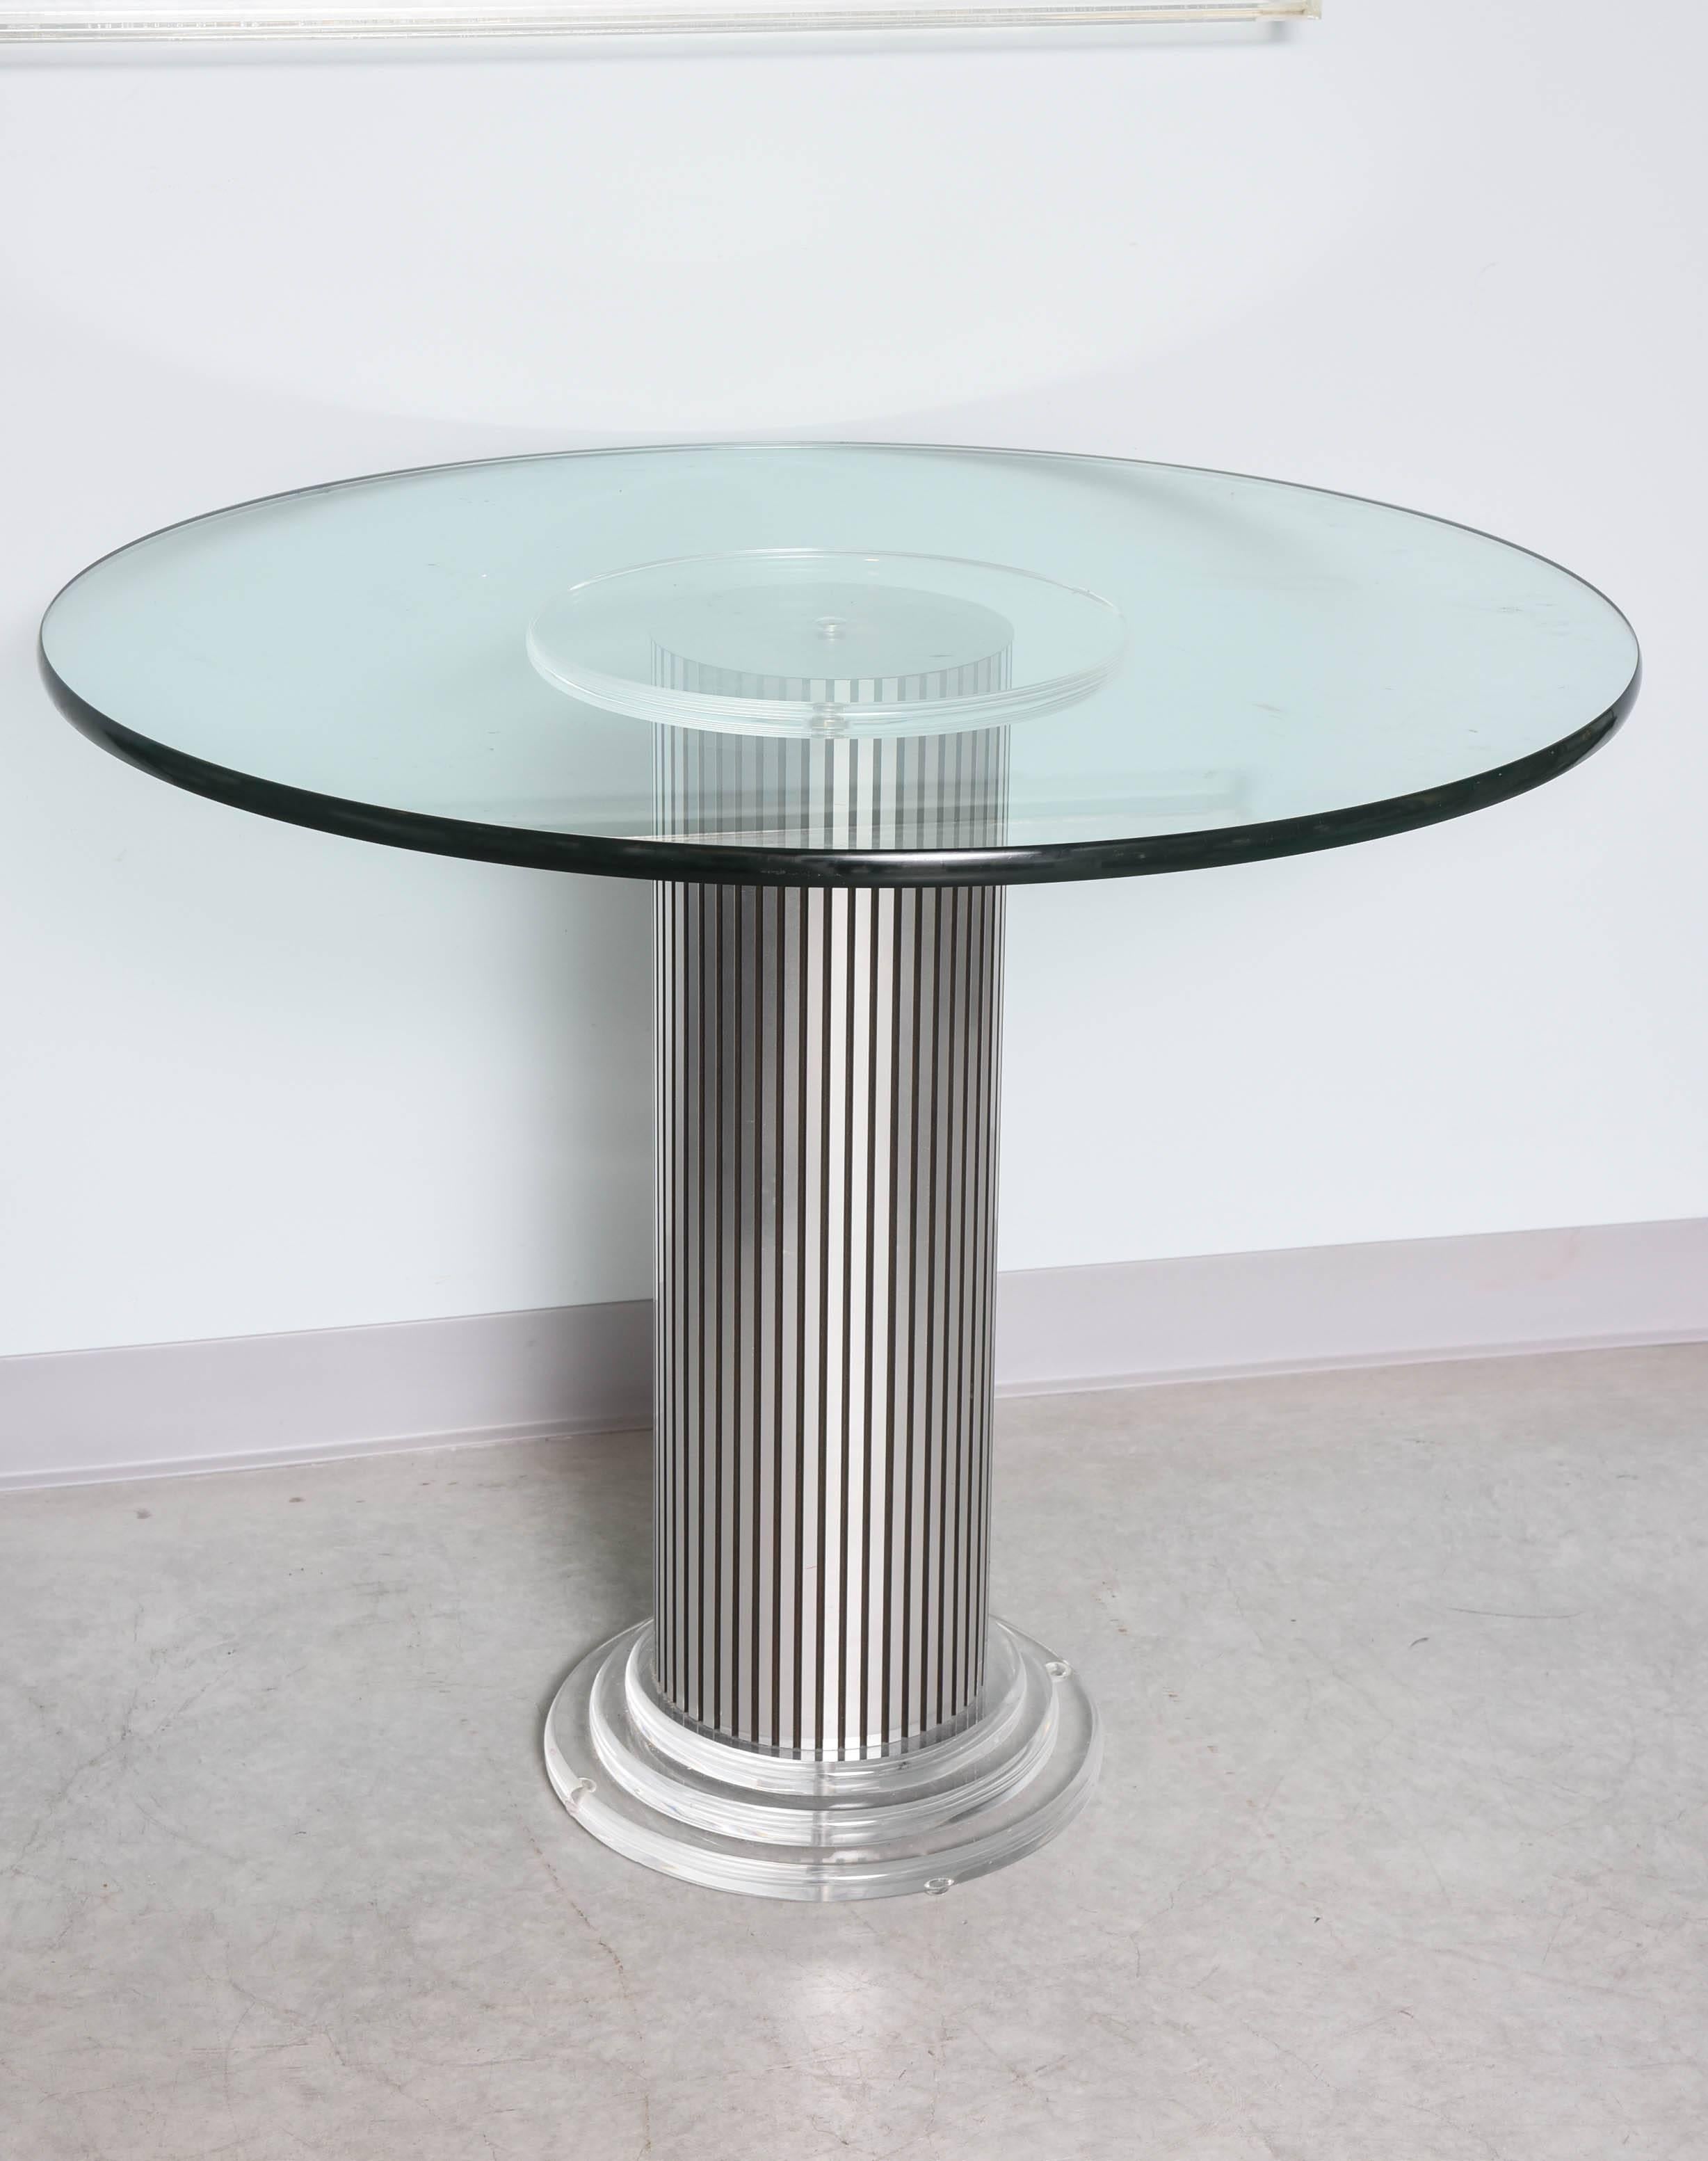 SALE !SALE !SALE!  Vintage, Lucite Pedestal Table with Round 1